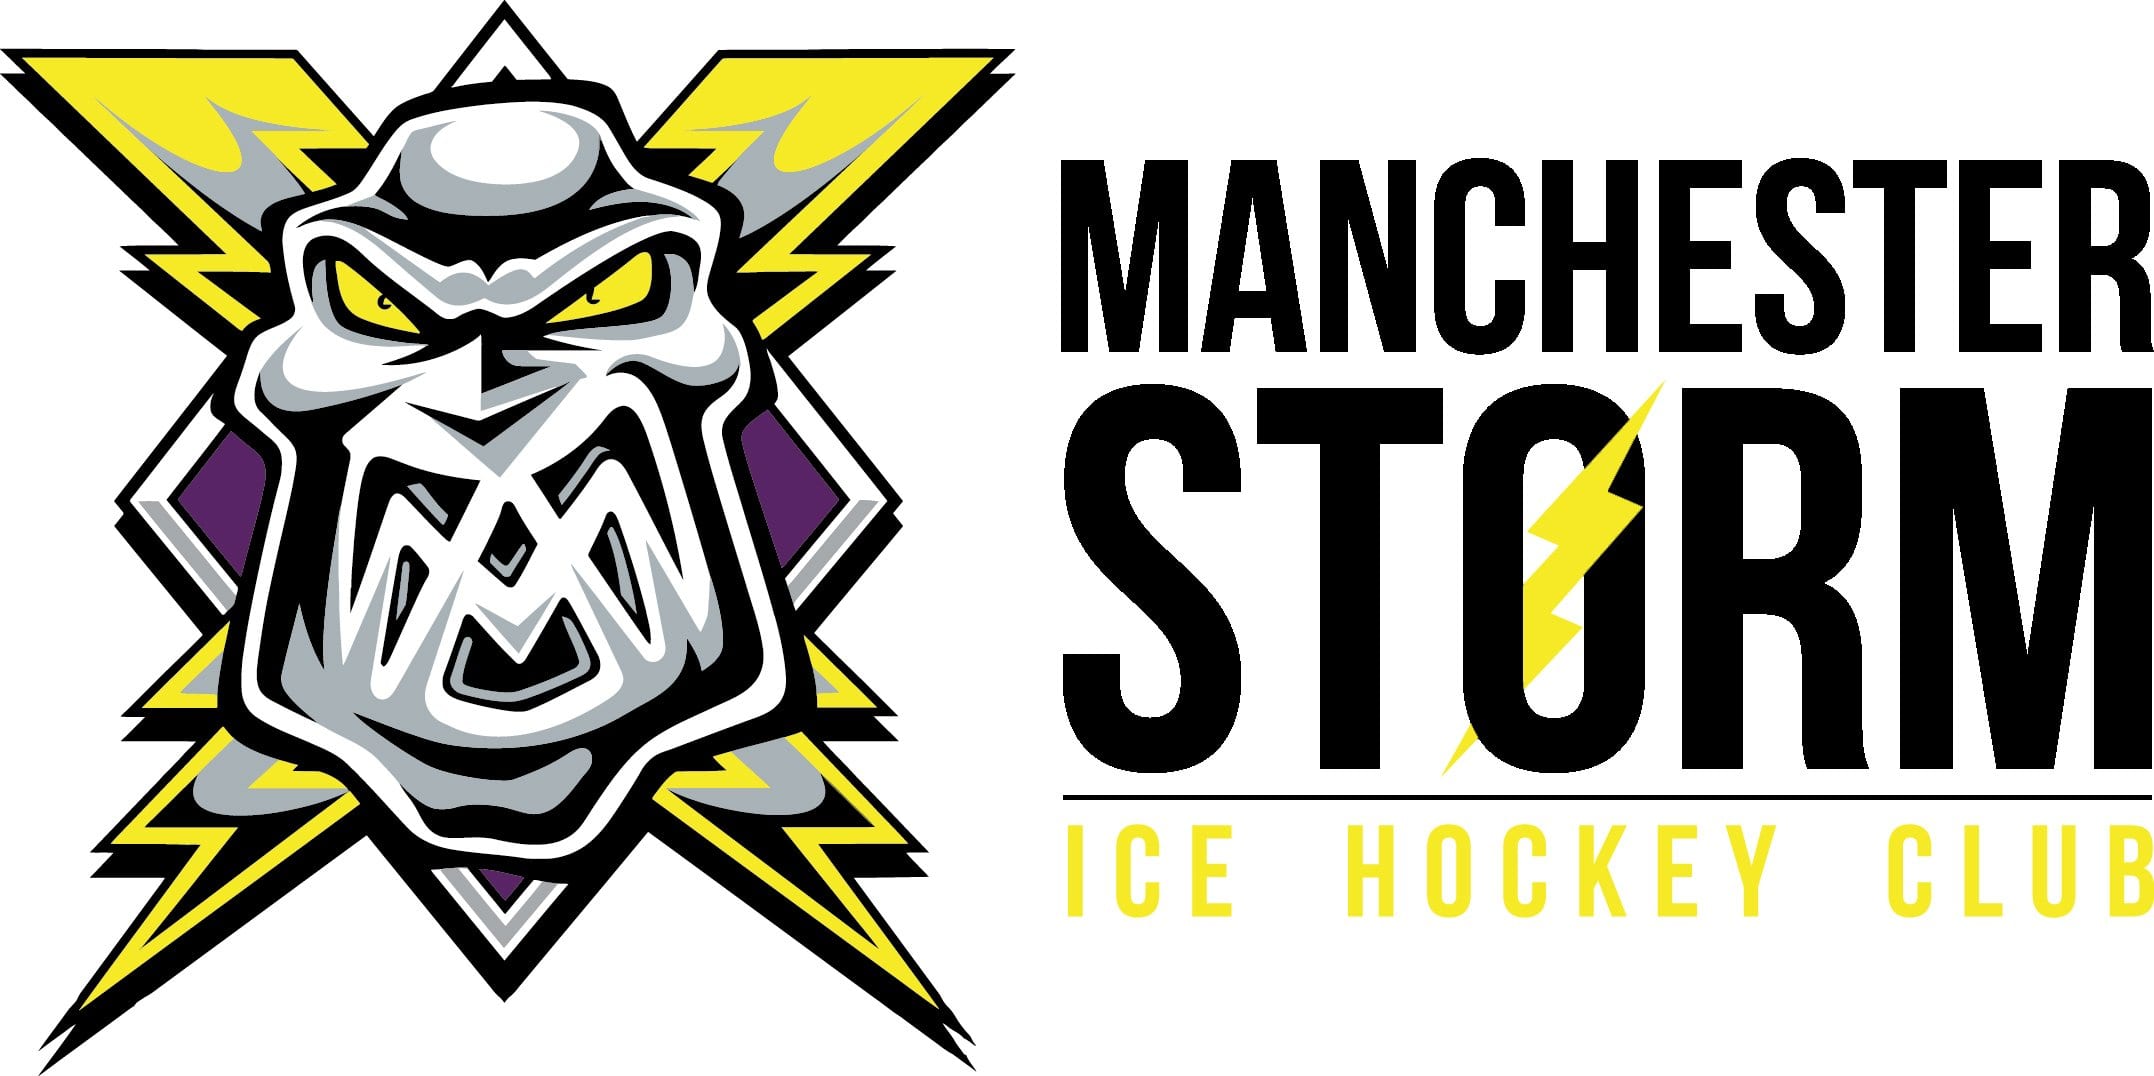 Manchester Storm Highlights Logo 2, British Ice Hockey